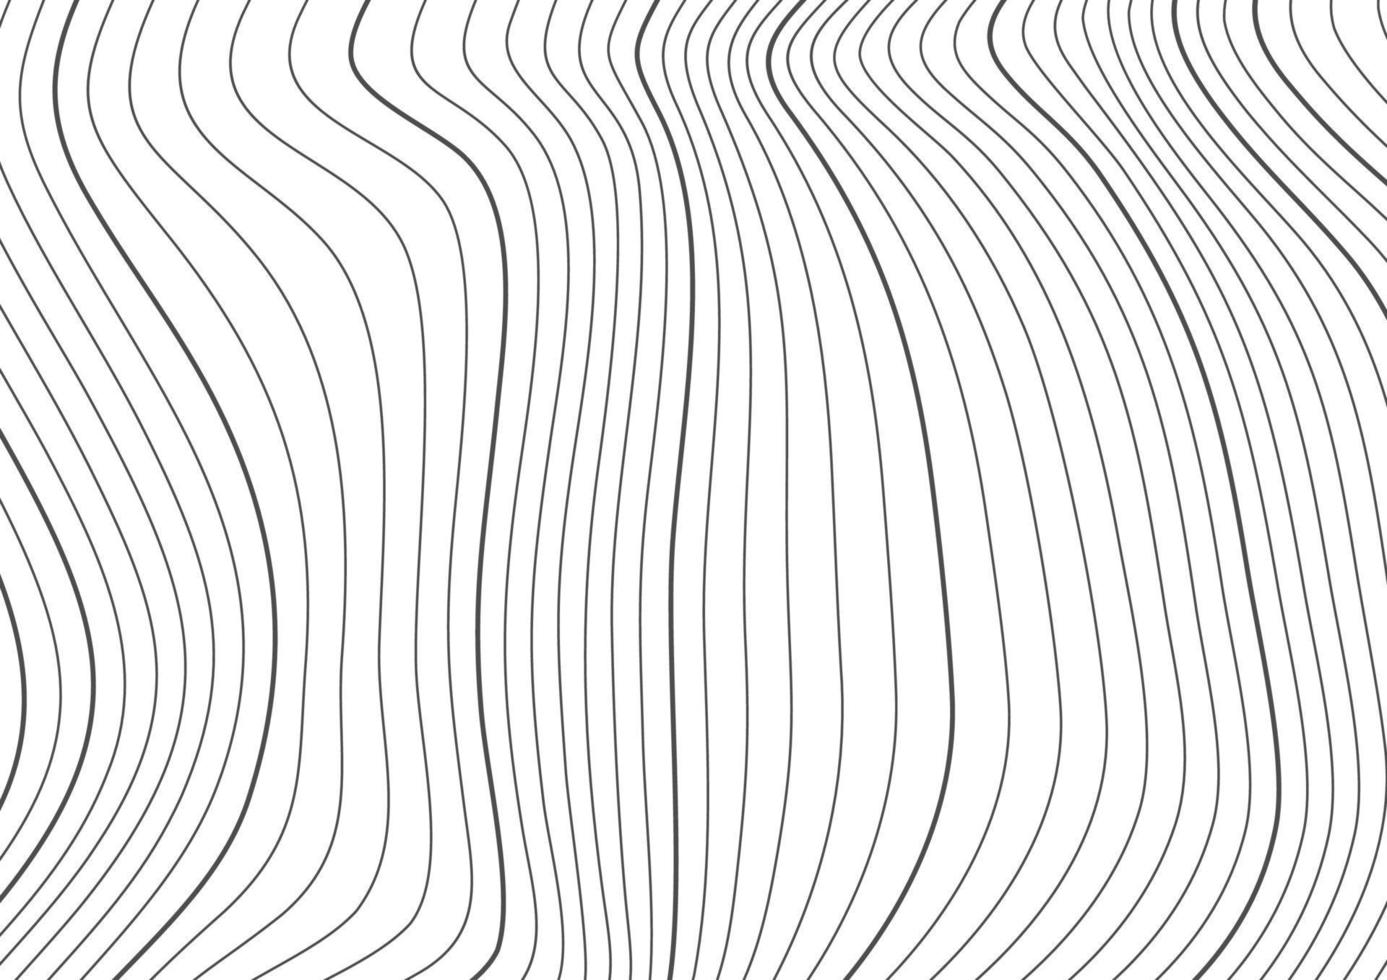 textura de onda abstrata com vetor de fundo branco